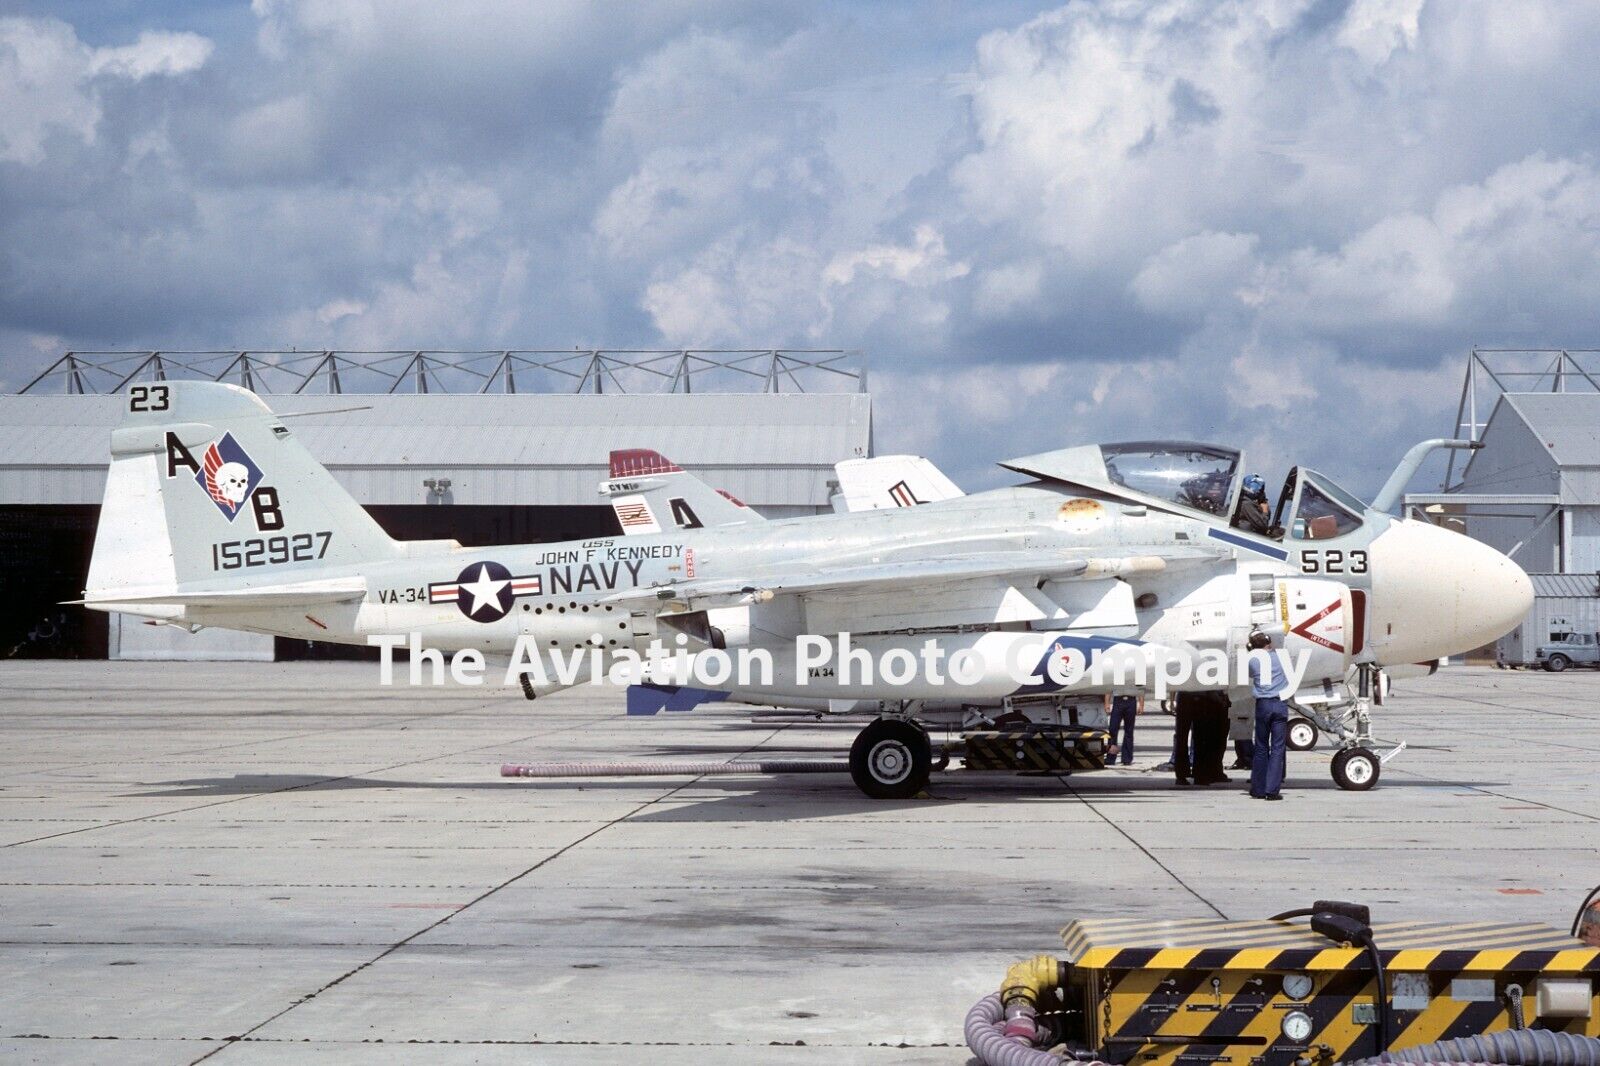 US Navy VA-34 Grumman KA-6D Intruder 152927/AB-523 (1976) Photograph